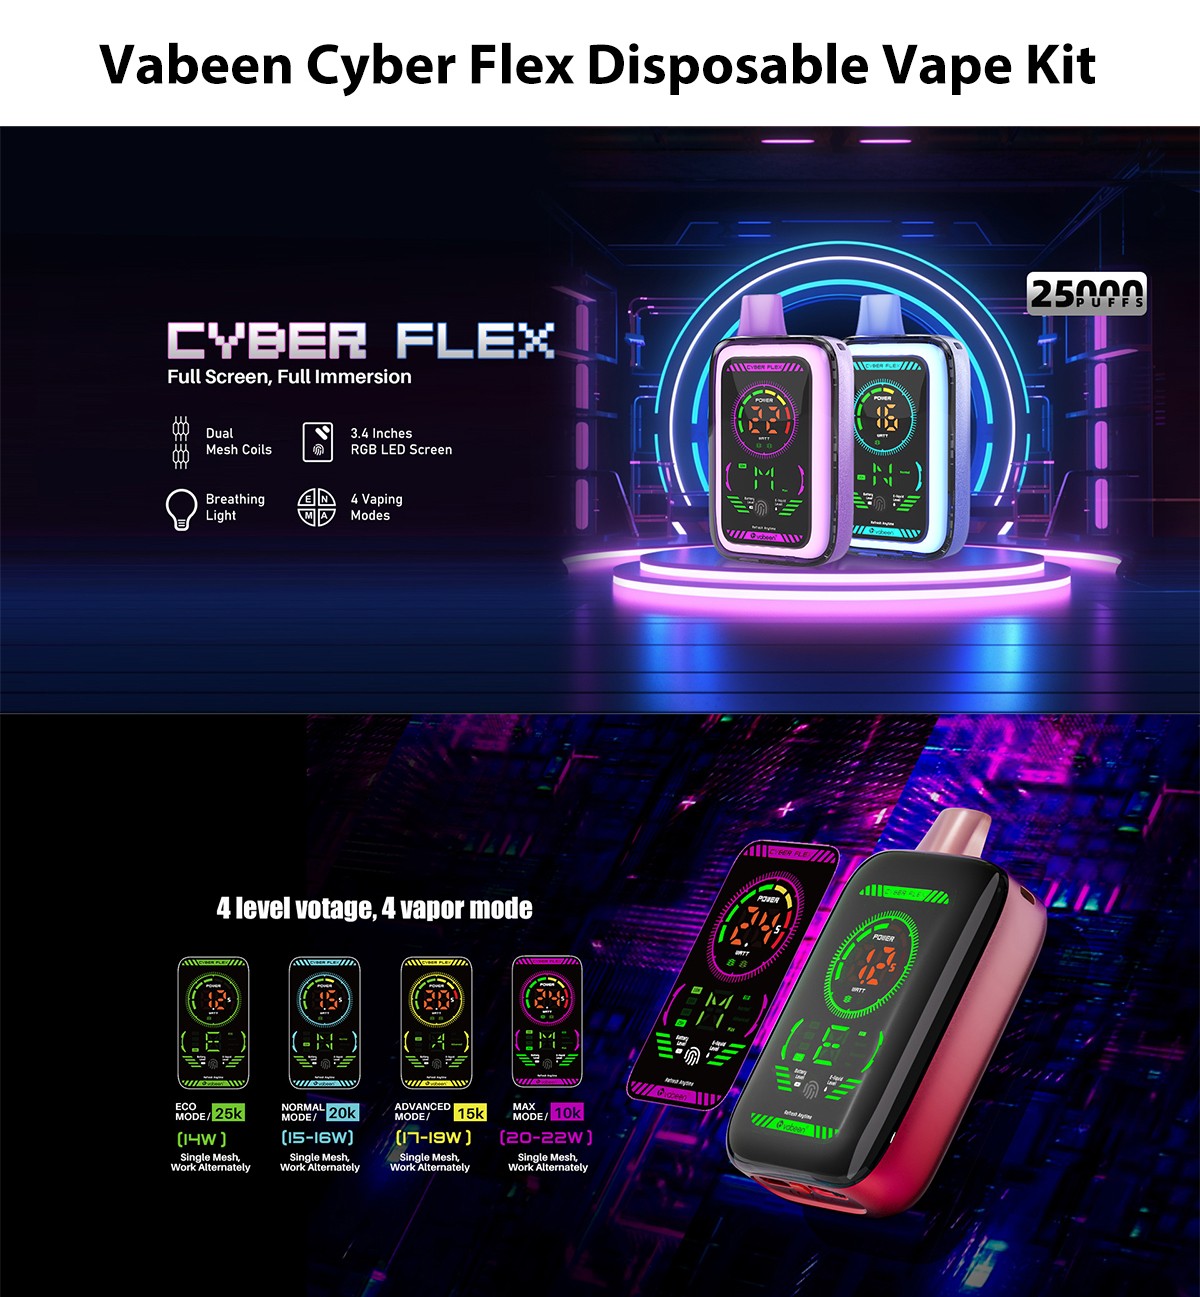 Vabeen Cyber Flex Disposable